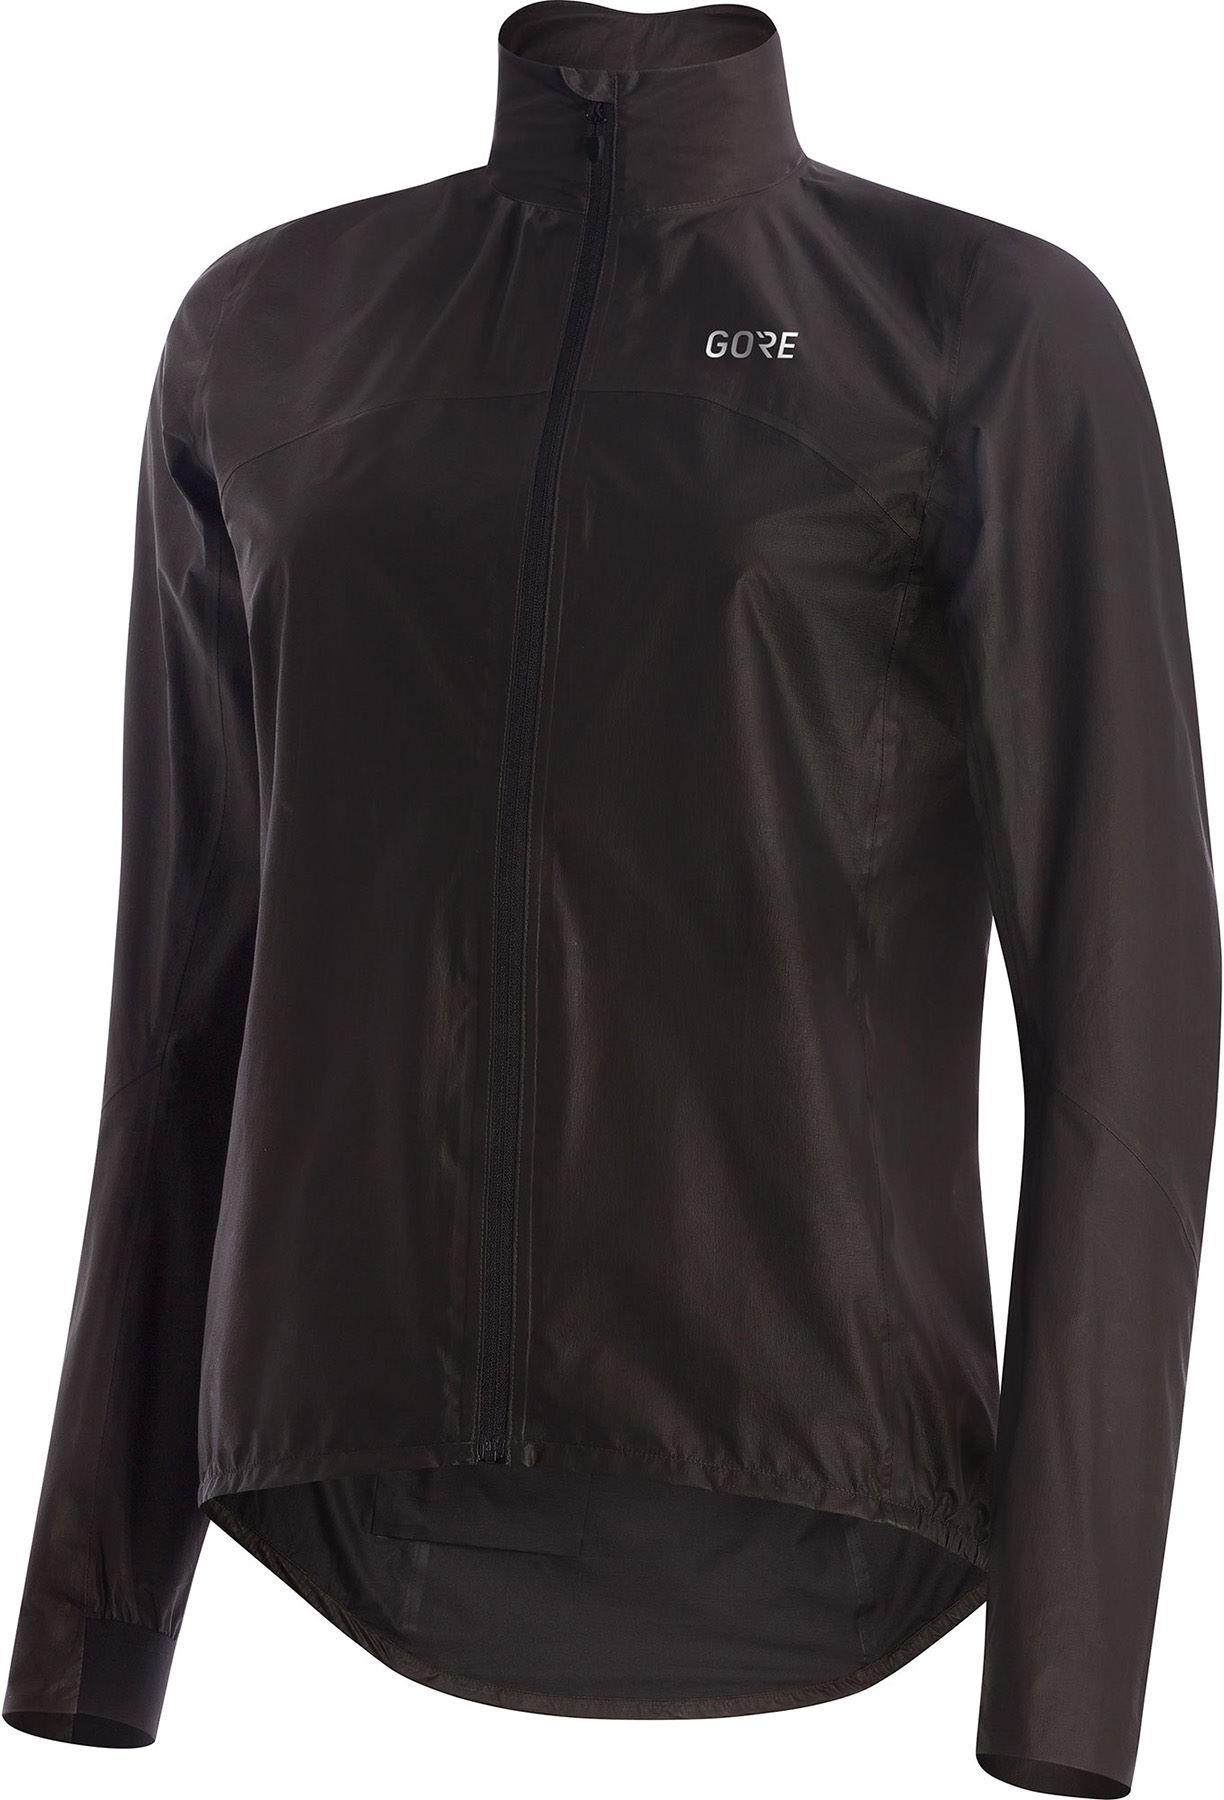 Gorewear Womens C7 Goretex Shakedry Jacket - Black